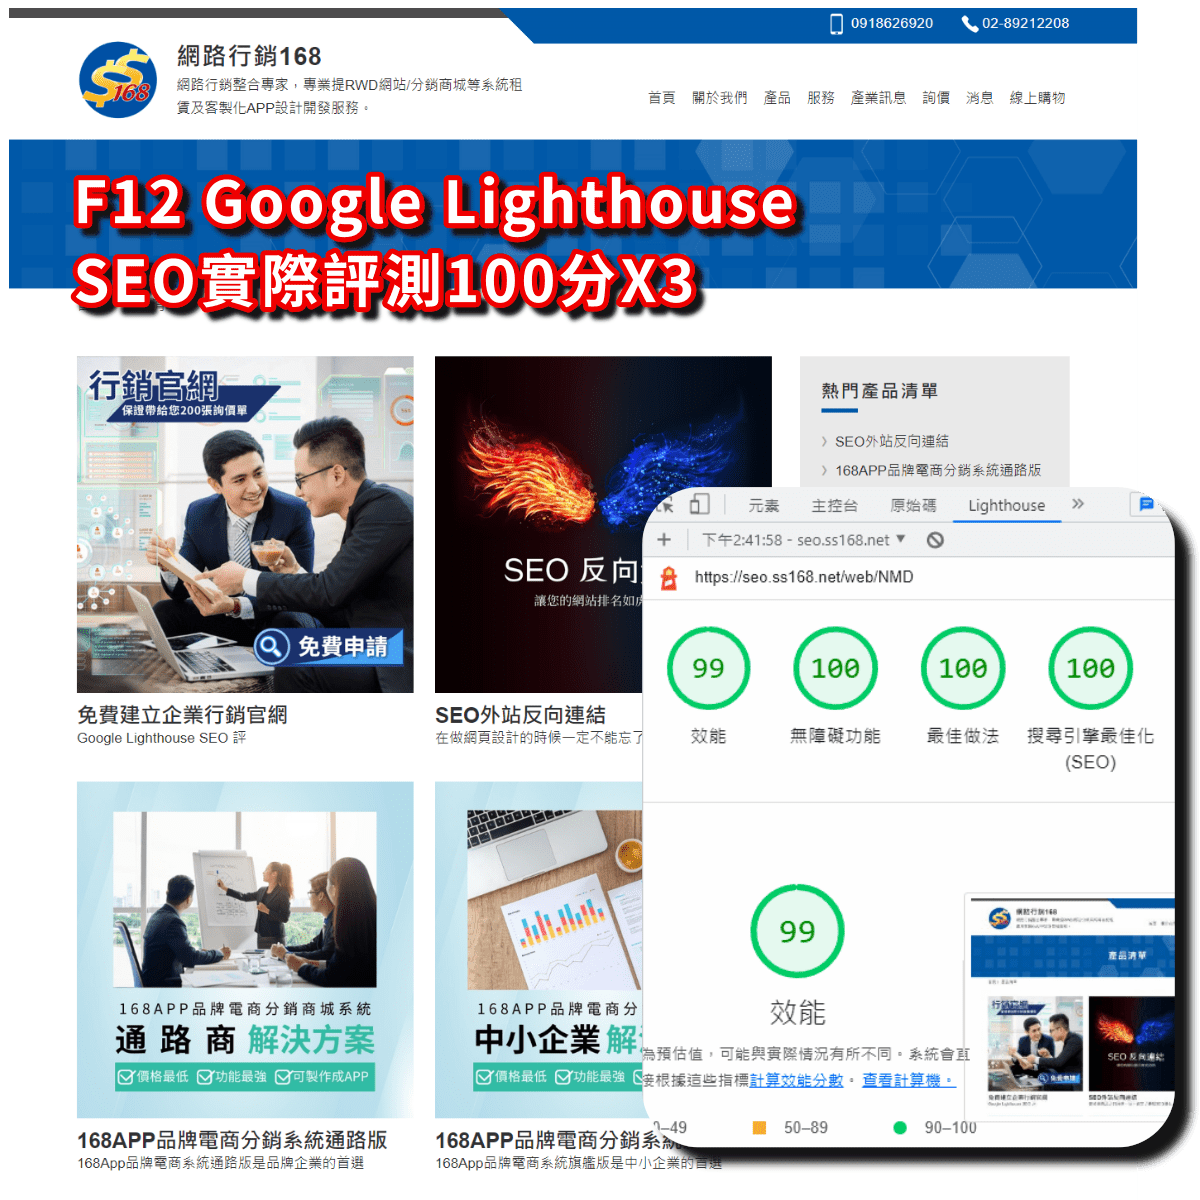 Google Lighthouse SEO評分